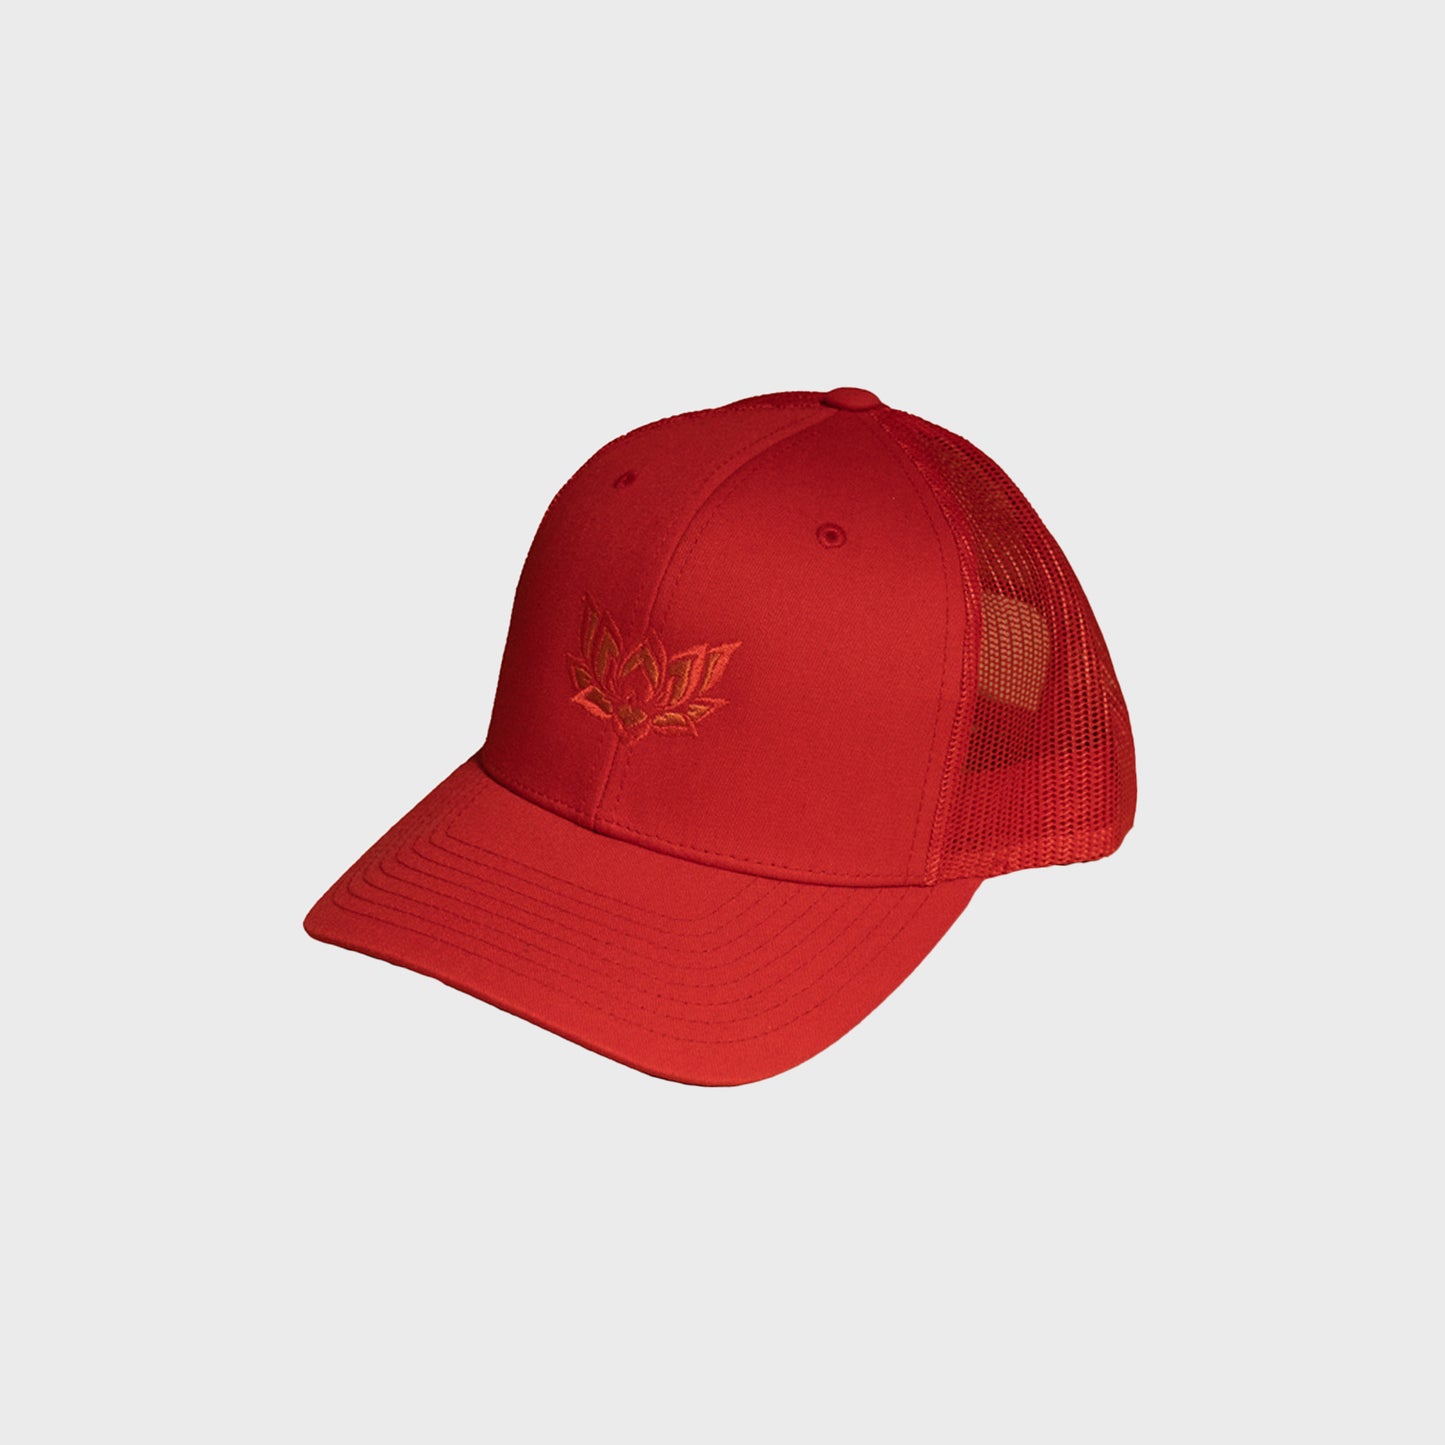 LOTUS TRUCKER CAP - RED